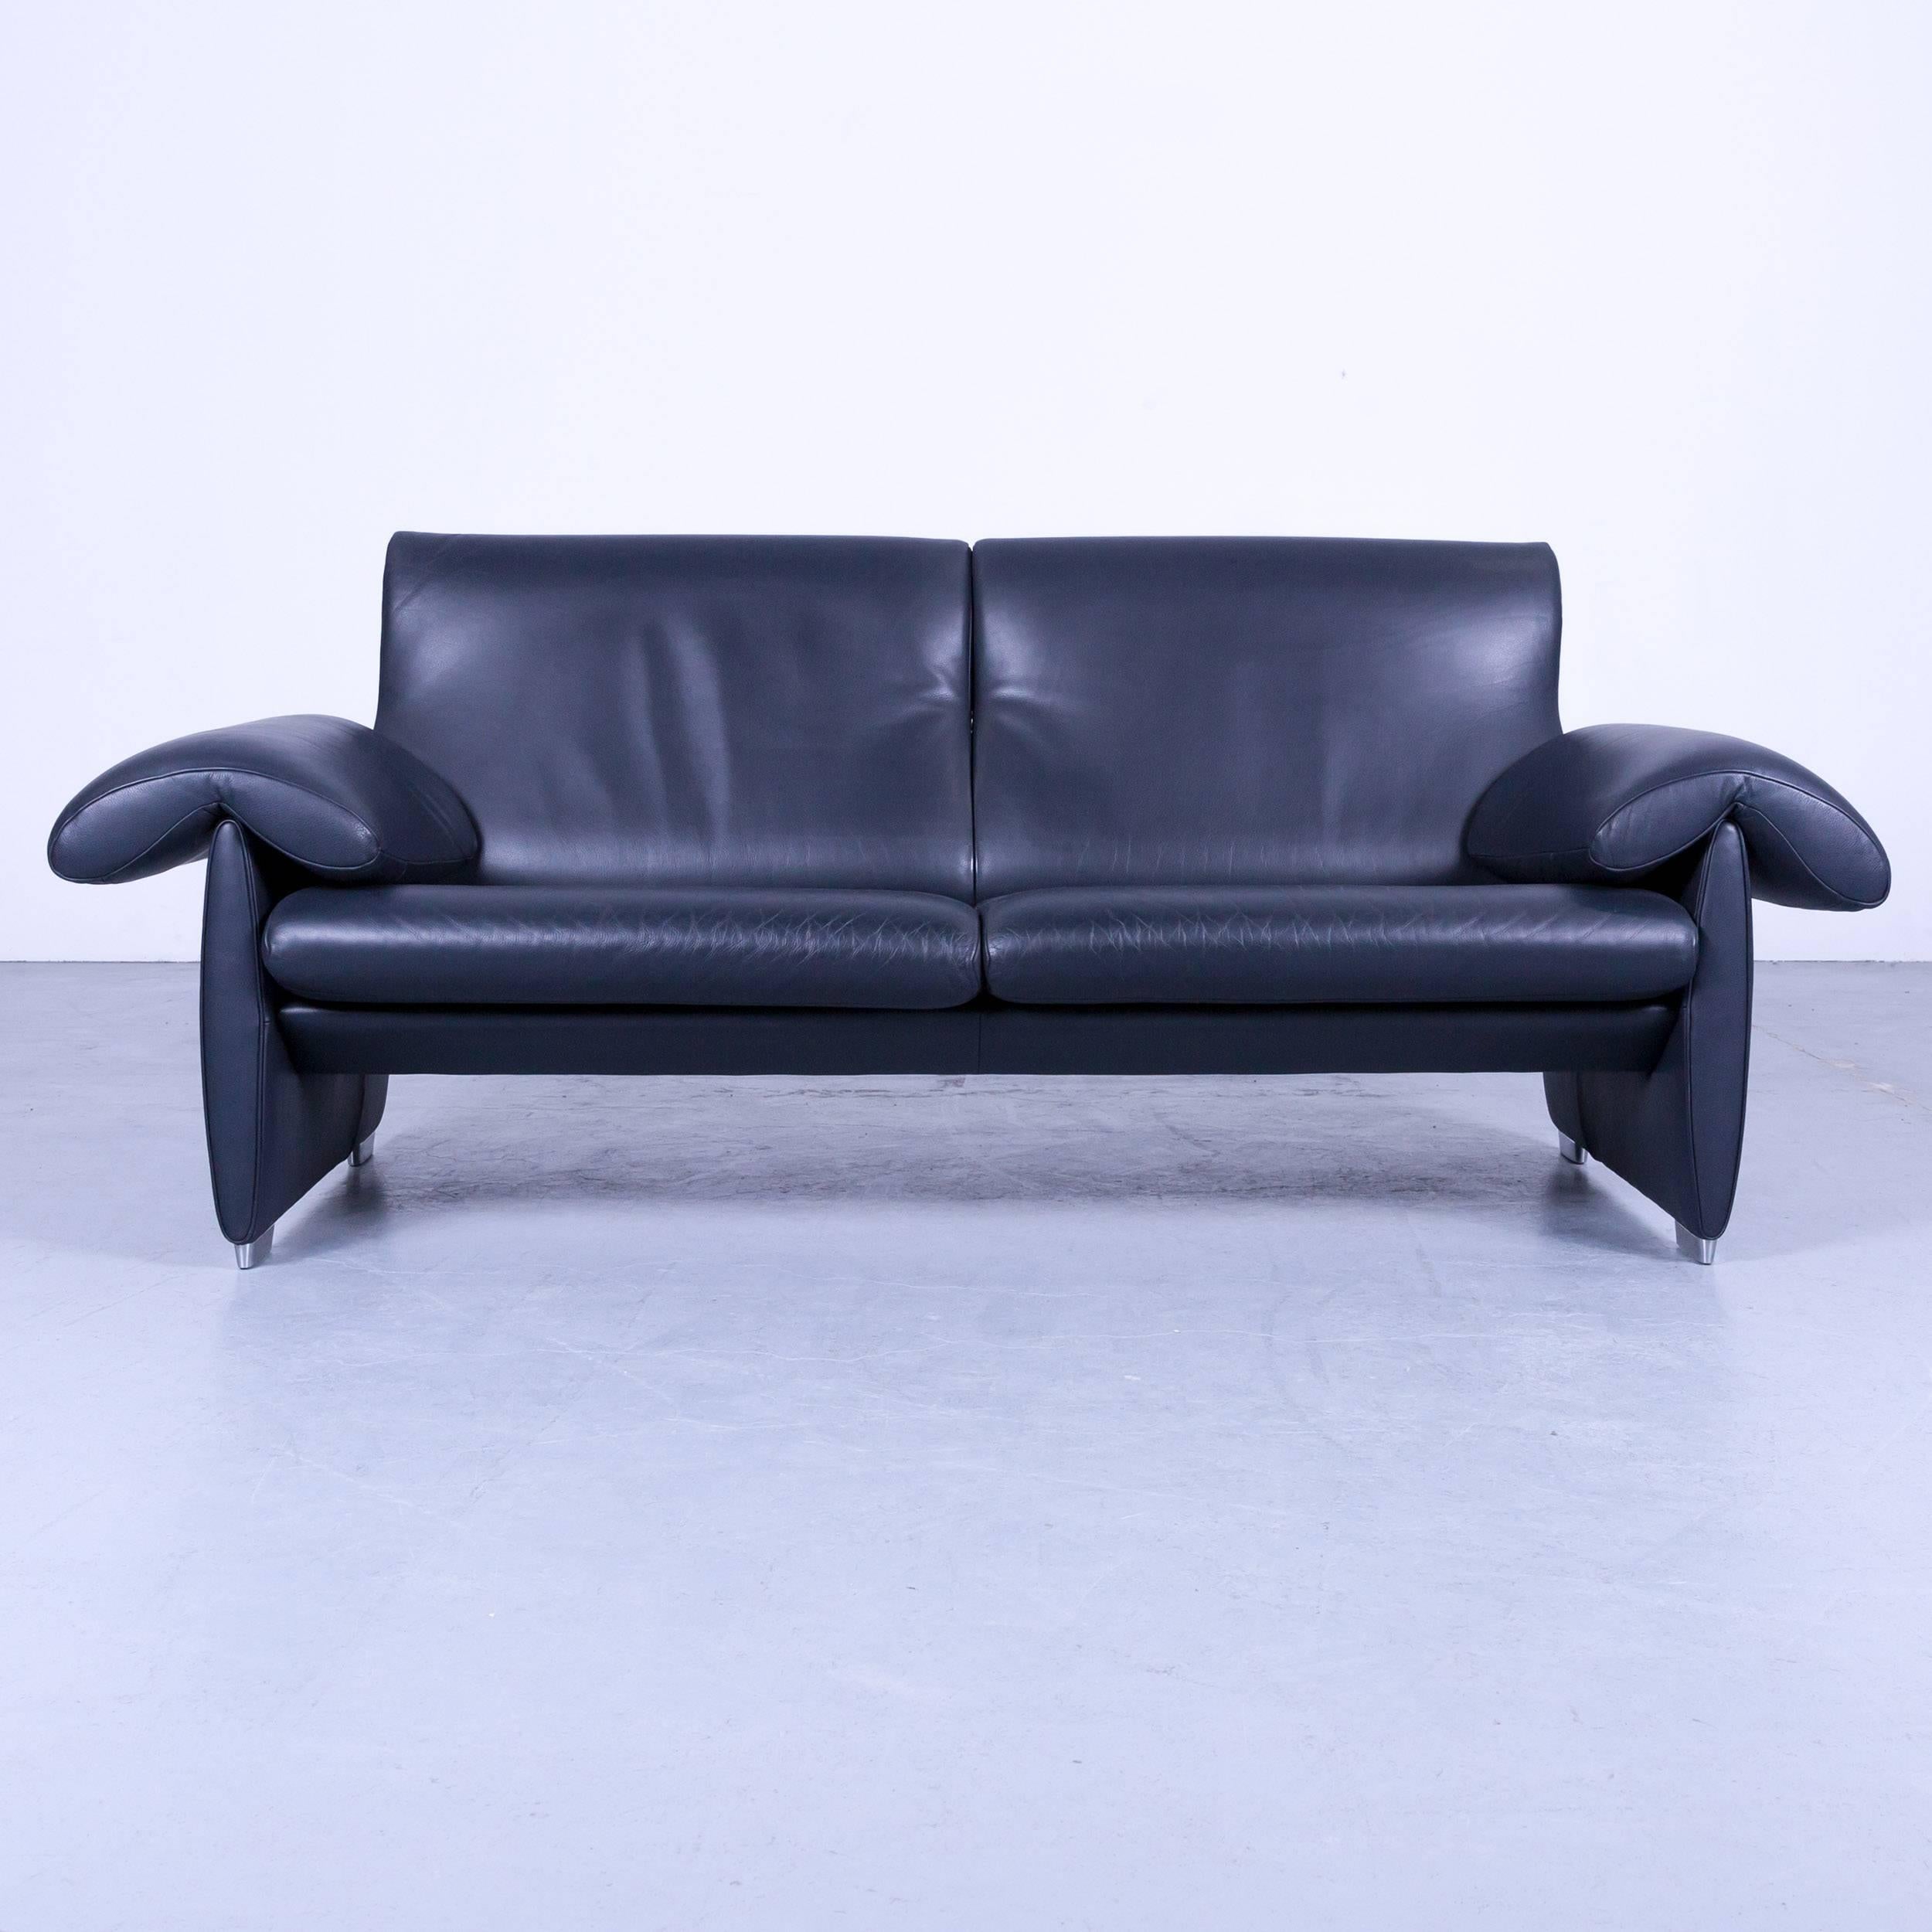 De Sede DS 10 designer leather sofa set dark navy blue three-seat armchair, made for pure comfort.